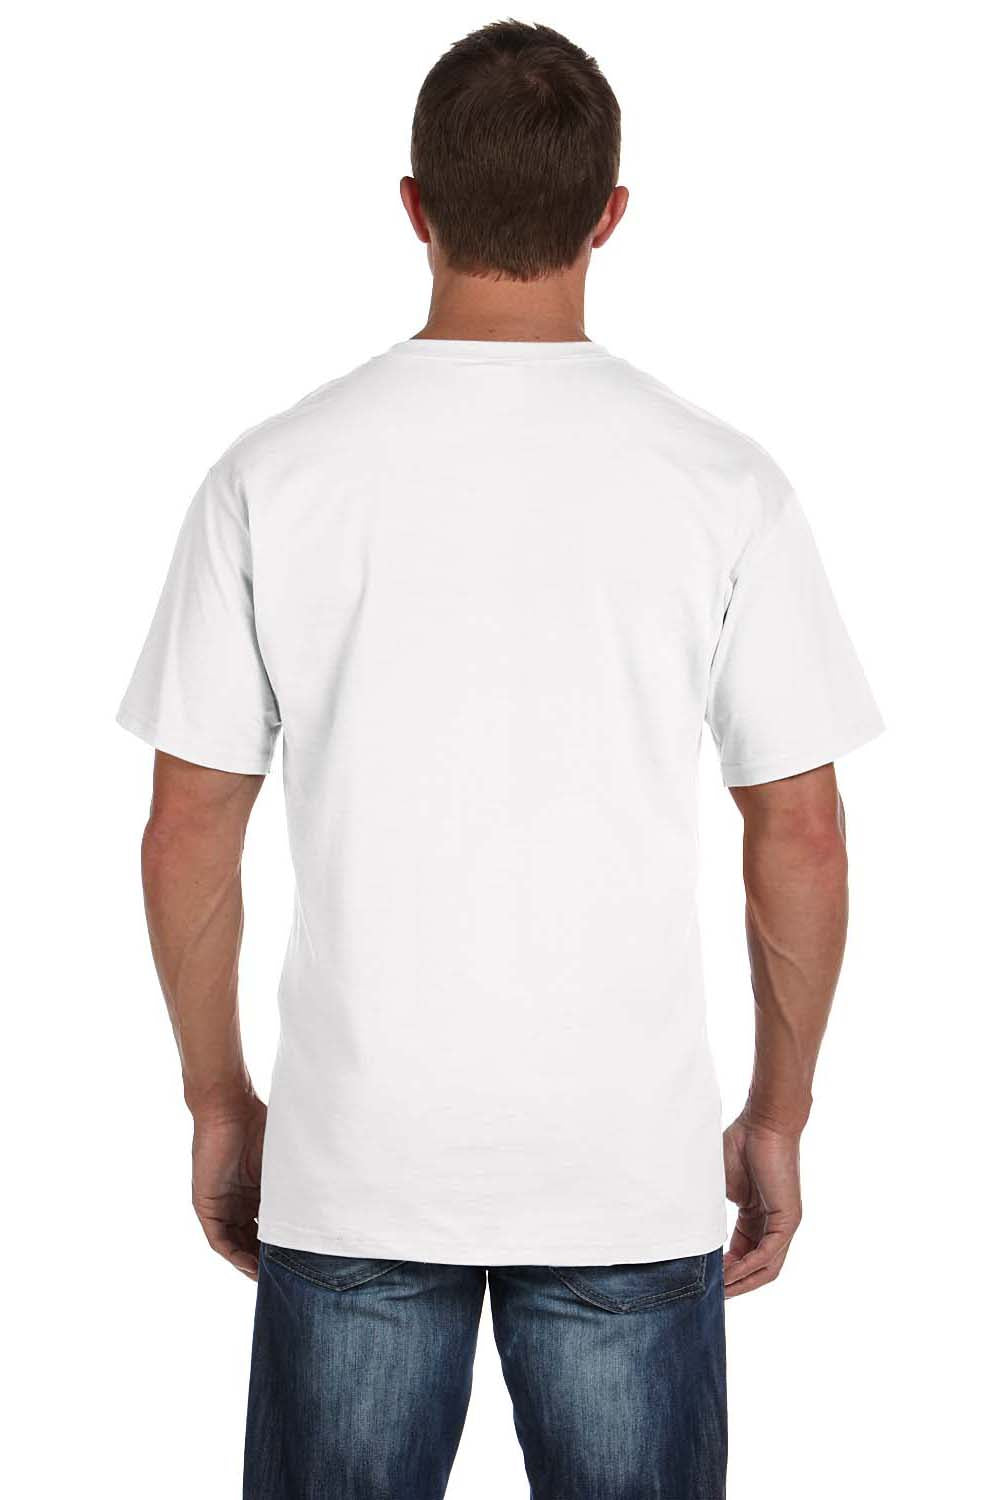 Fruit Of The Loom 3931P Mens HD Jersey Short Sleeve Crewneck T-Shirt w/ Pocket White Back